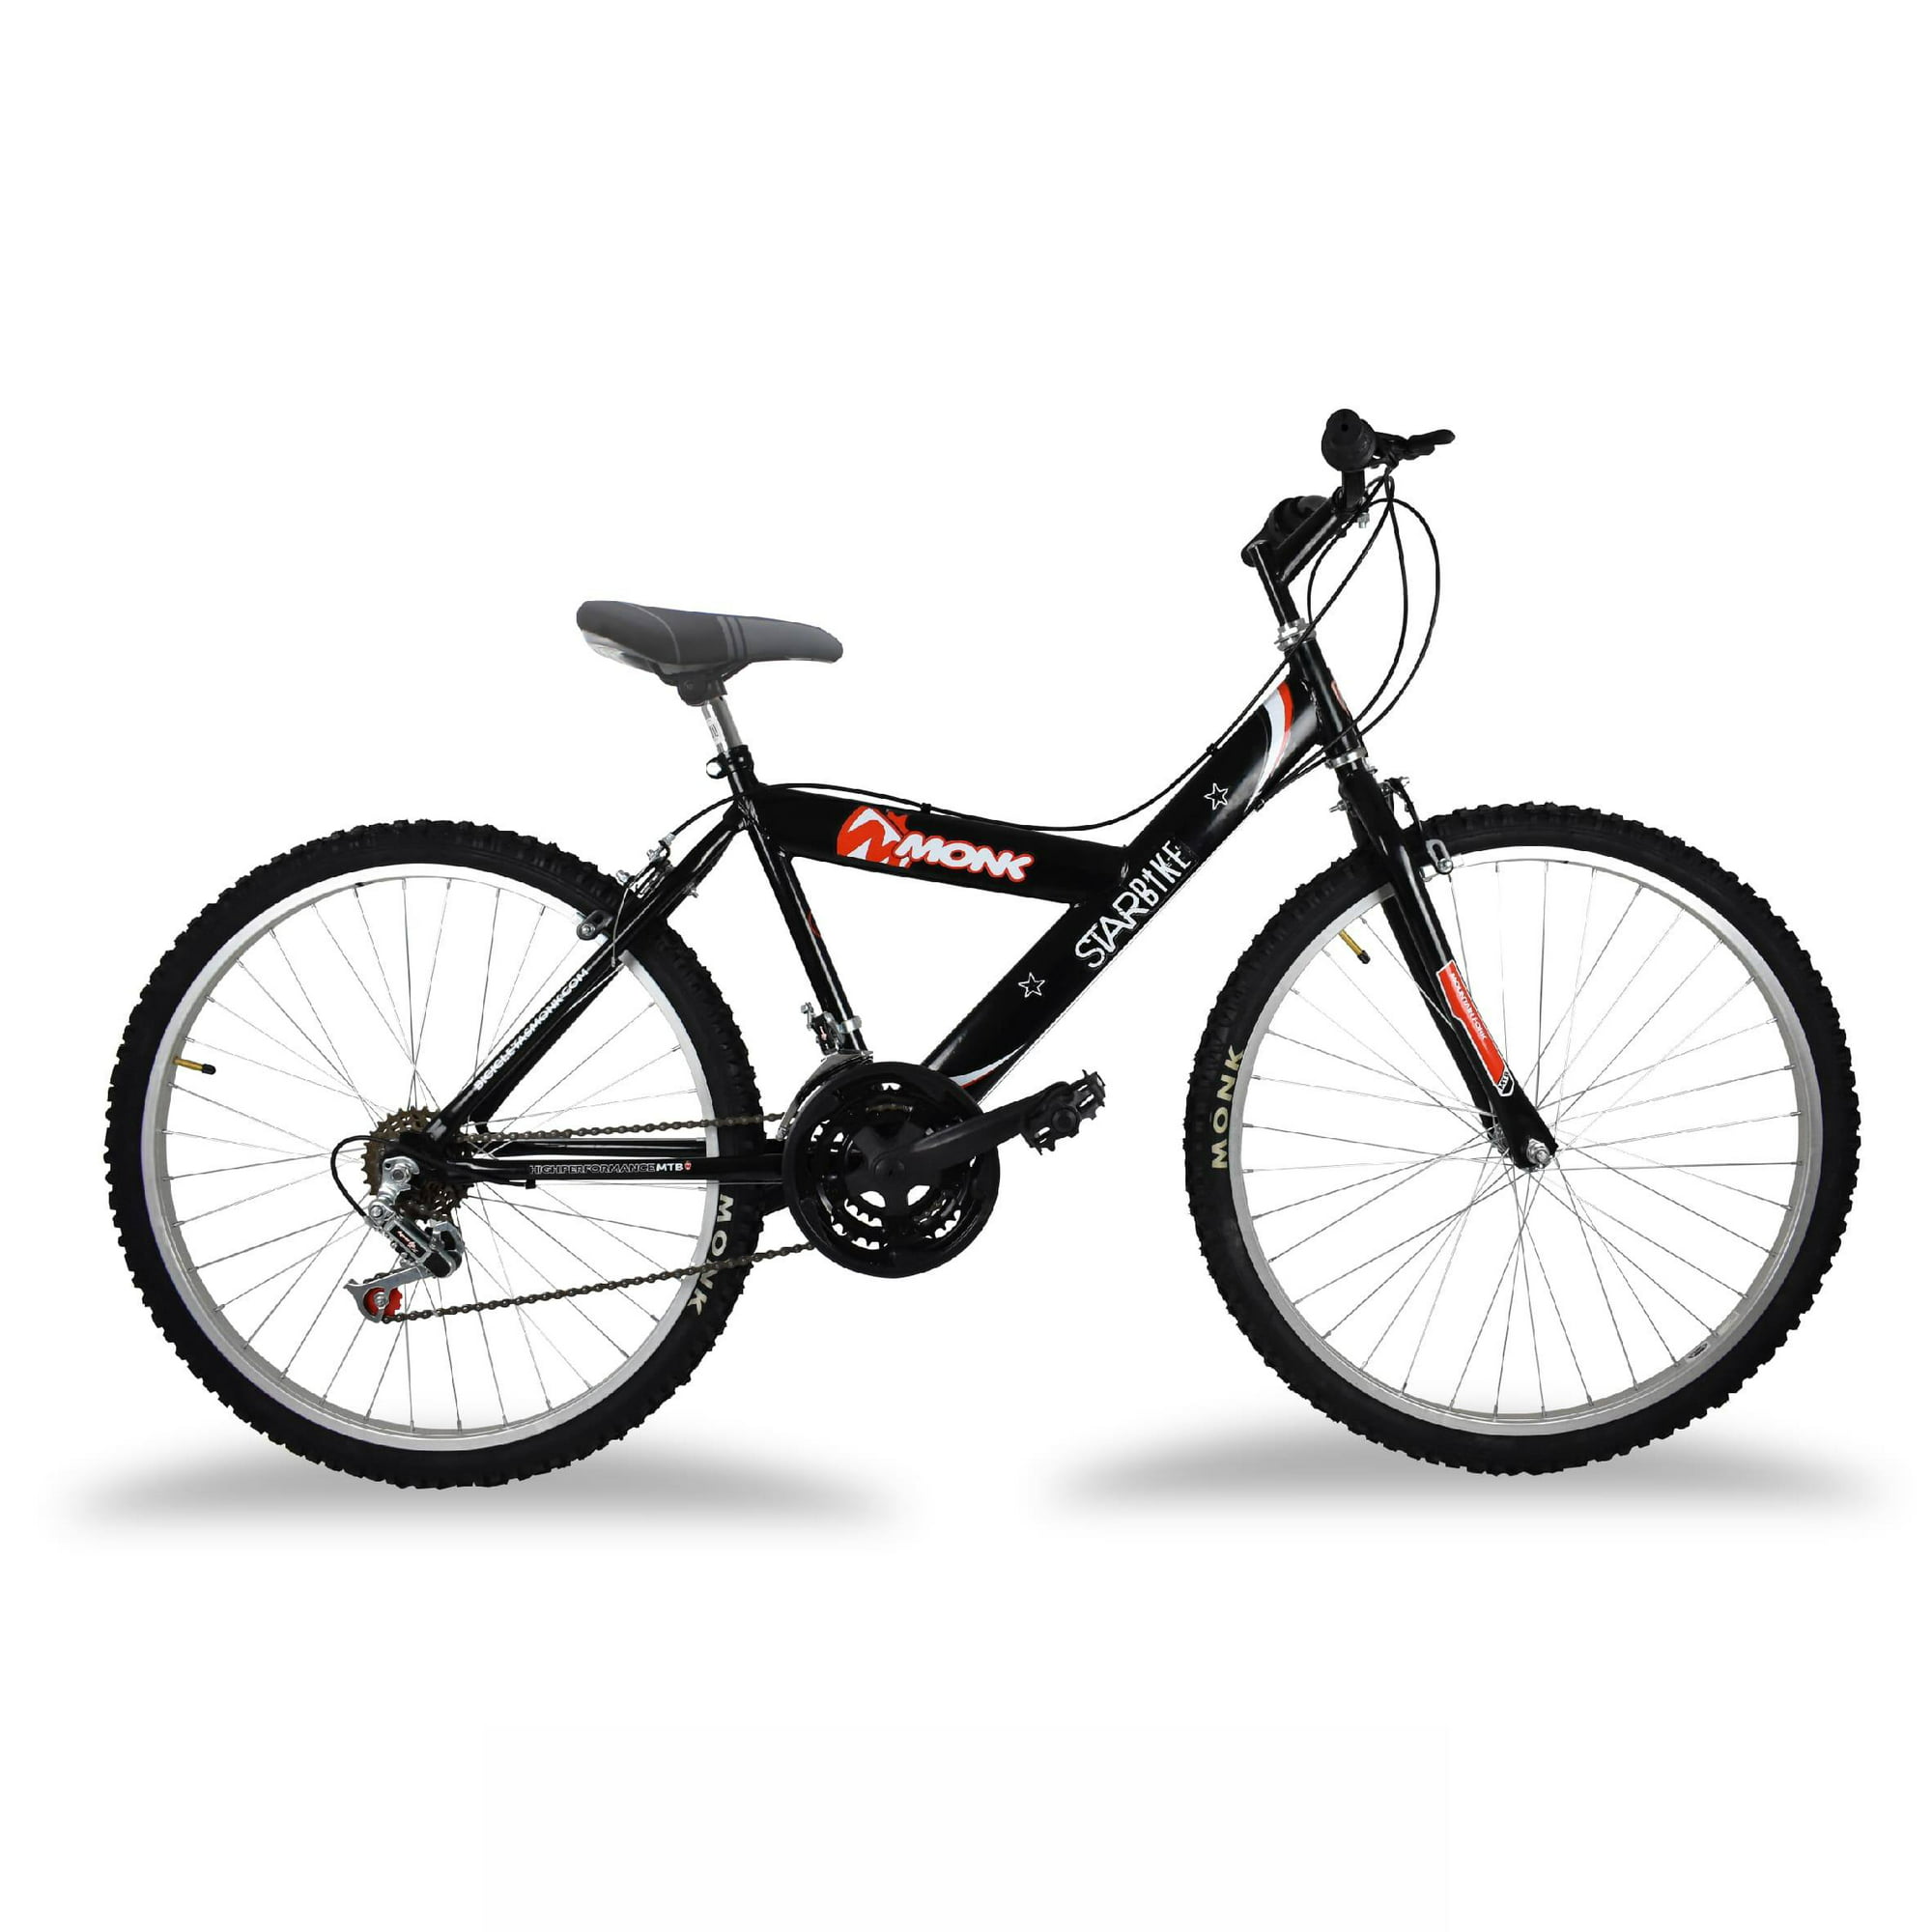 Las mejores ofertas en Bicicleta BMX Red Line bicicletas de adultos Unisex